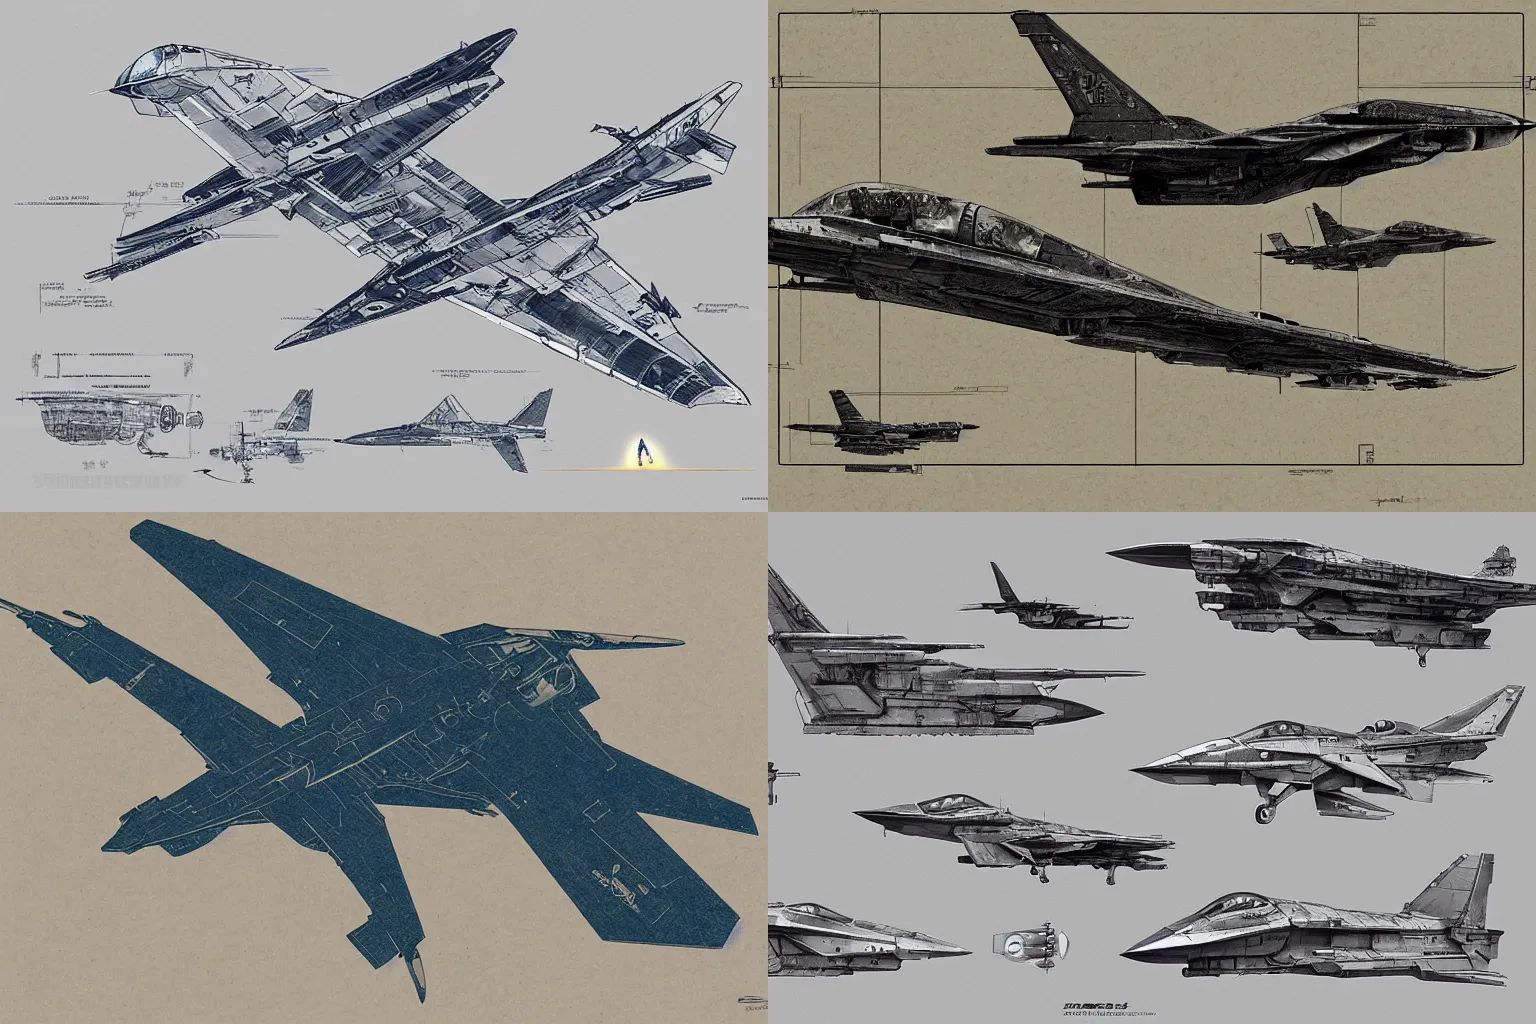 Prompt: iconic fighter jet plane blueprint by shoji kawamori, top secret space plane, tomcat raptor hornet falcon, style of greg rutkowski, style of john kenn mortensen